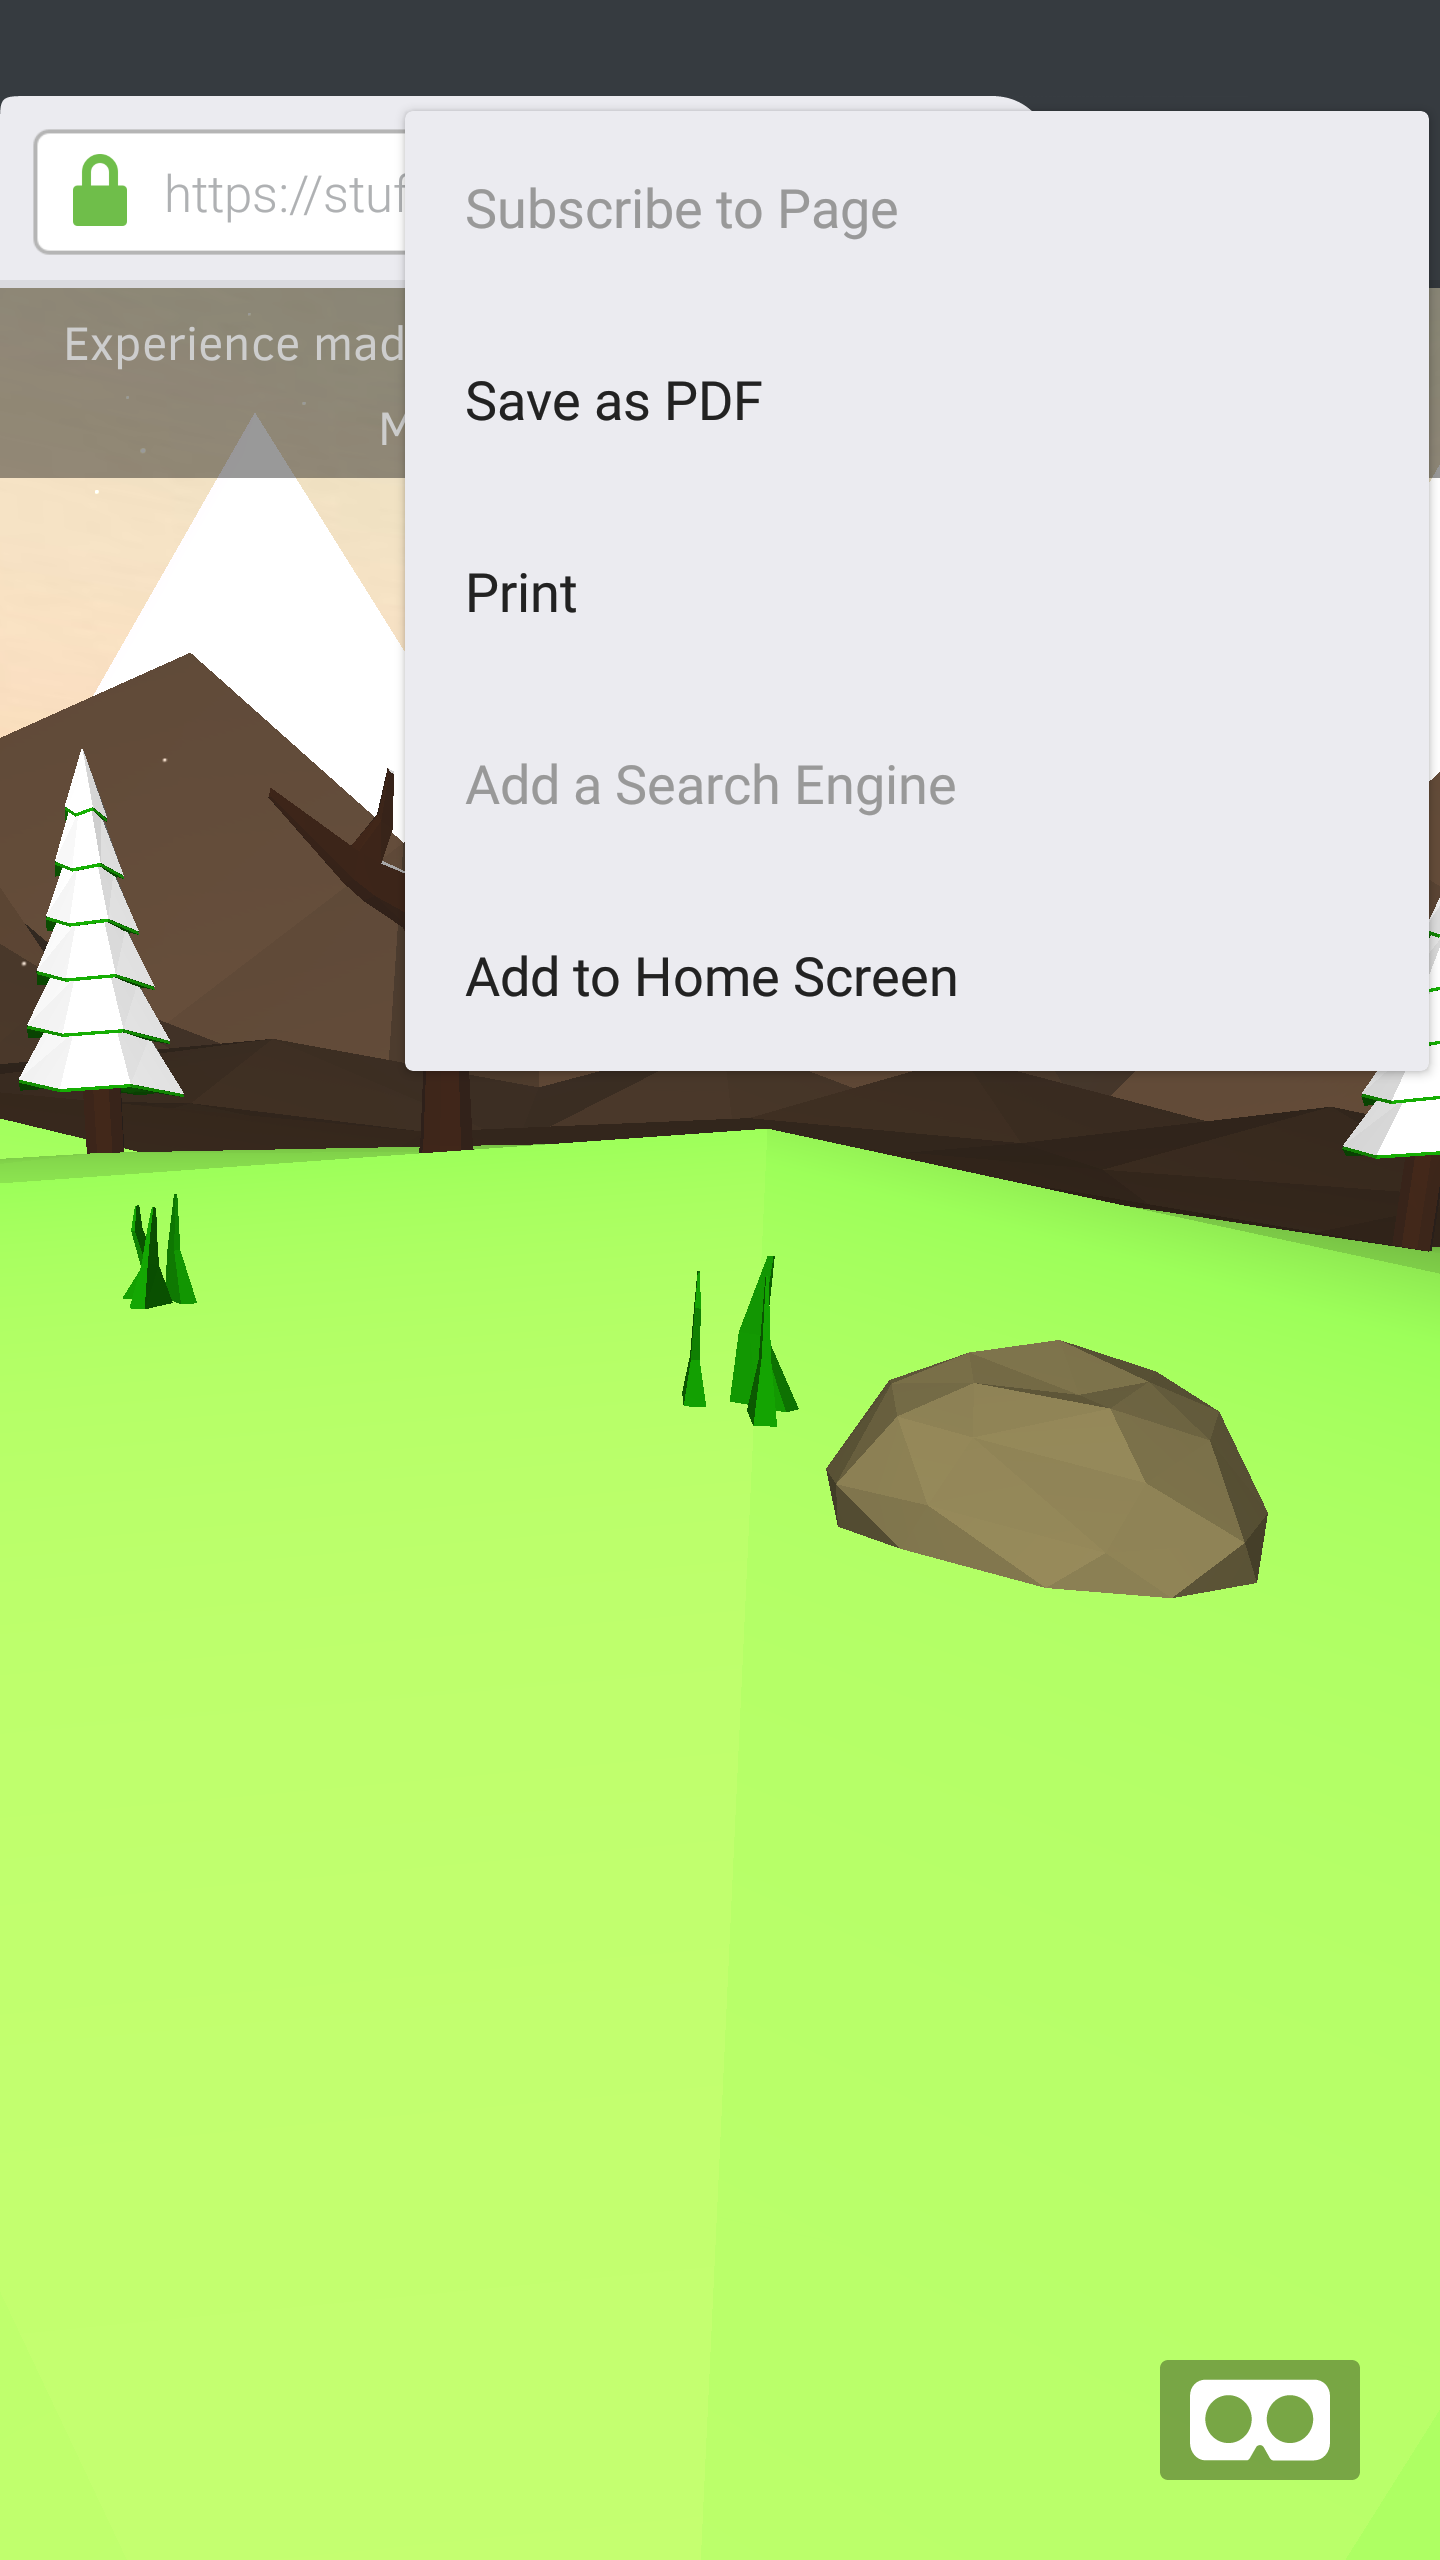 Firefox menu for "Add to Home Screen"